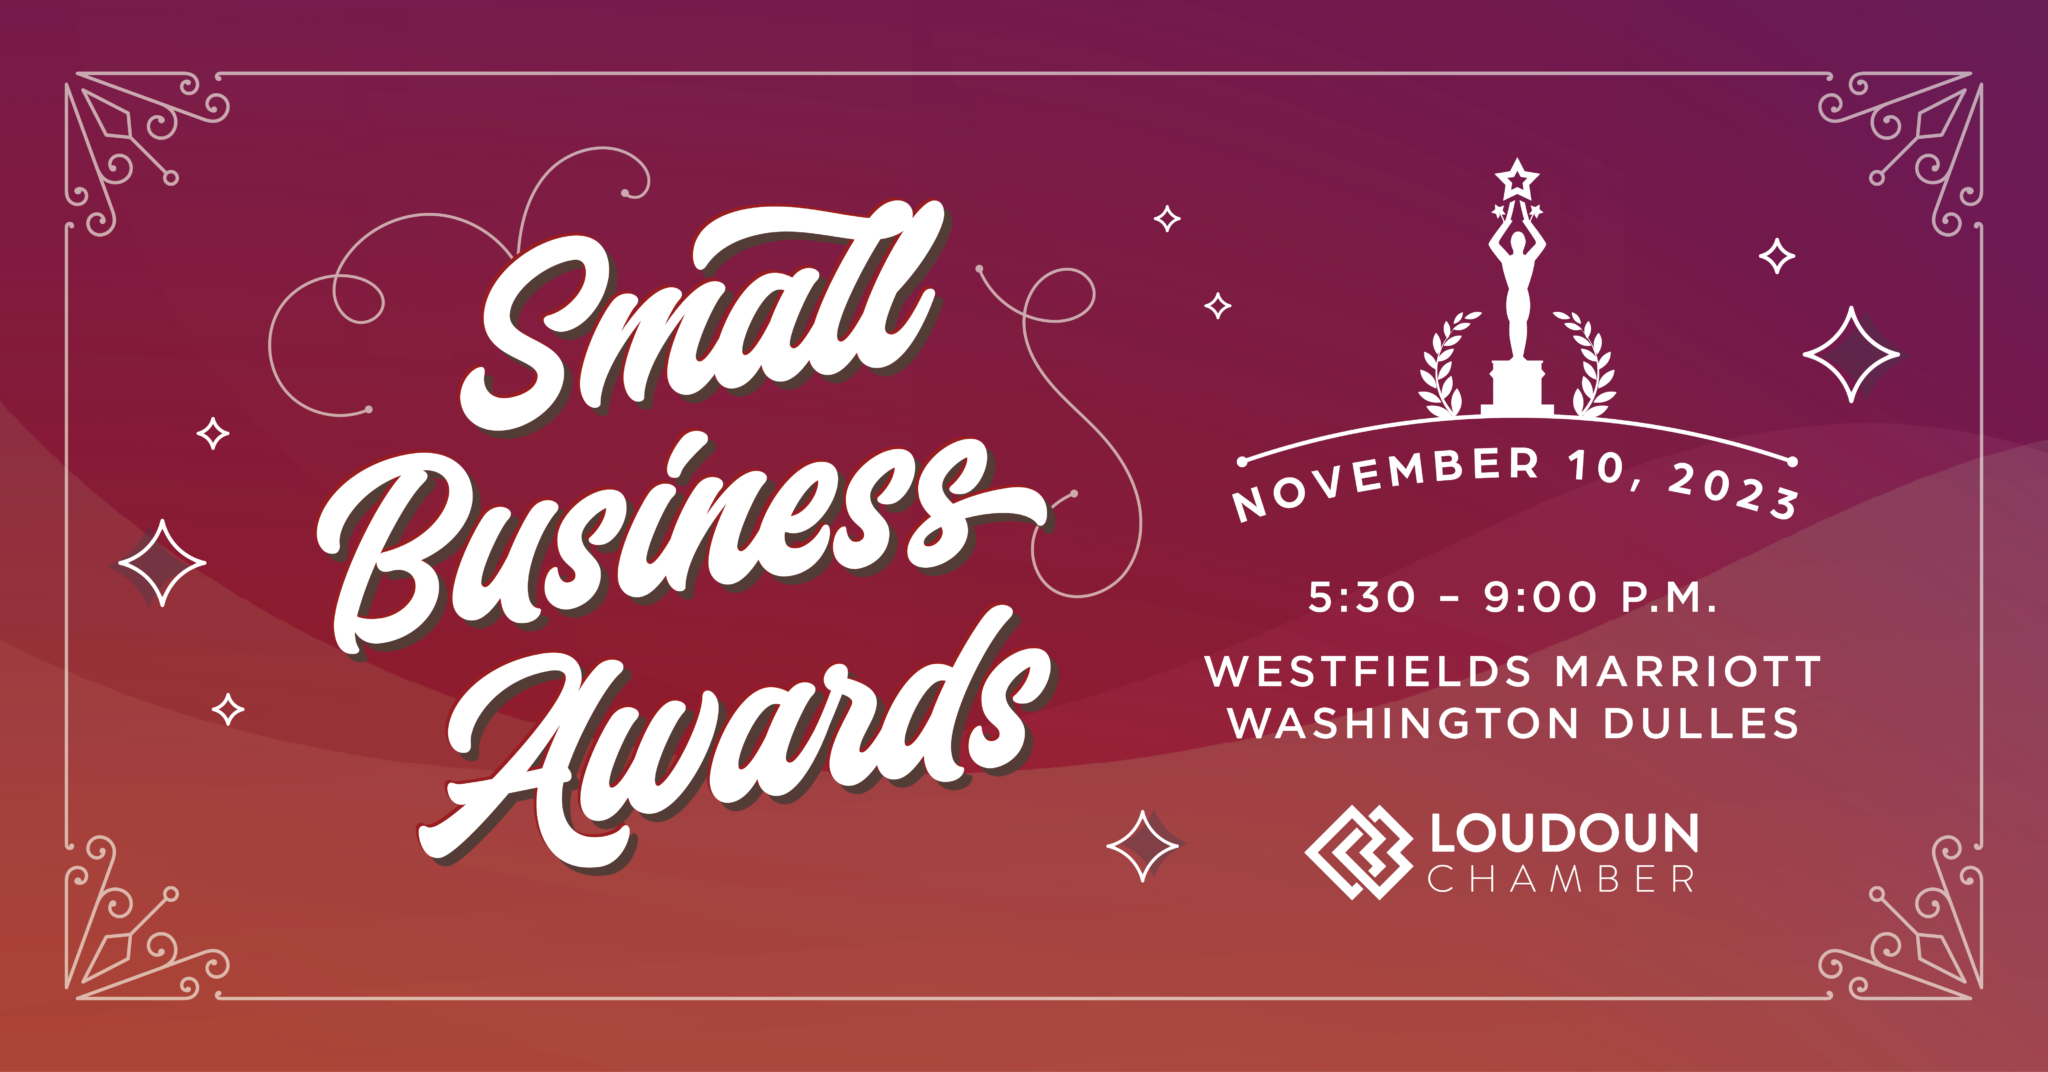 29th Annual Loudoun Small Business Awards